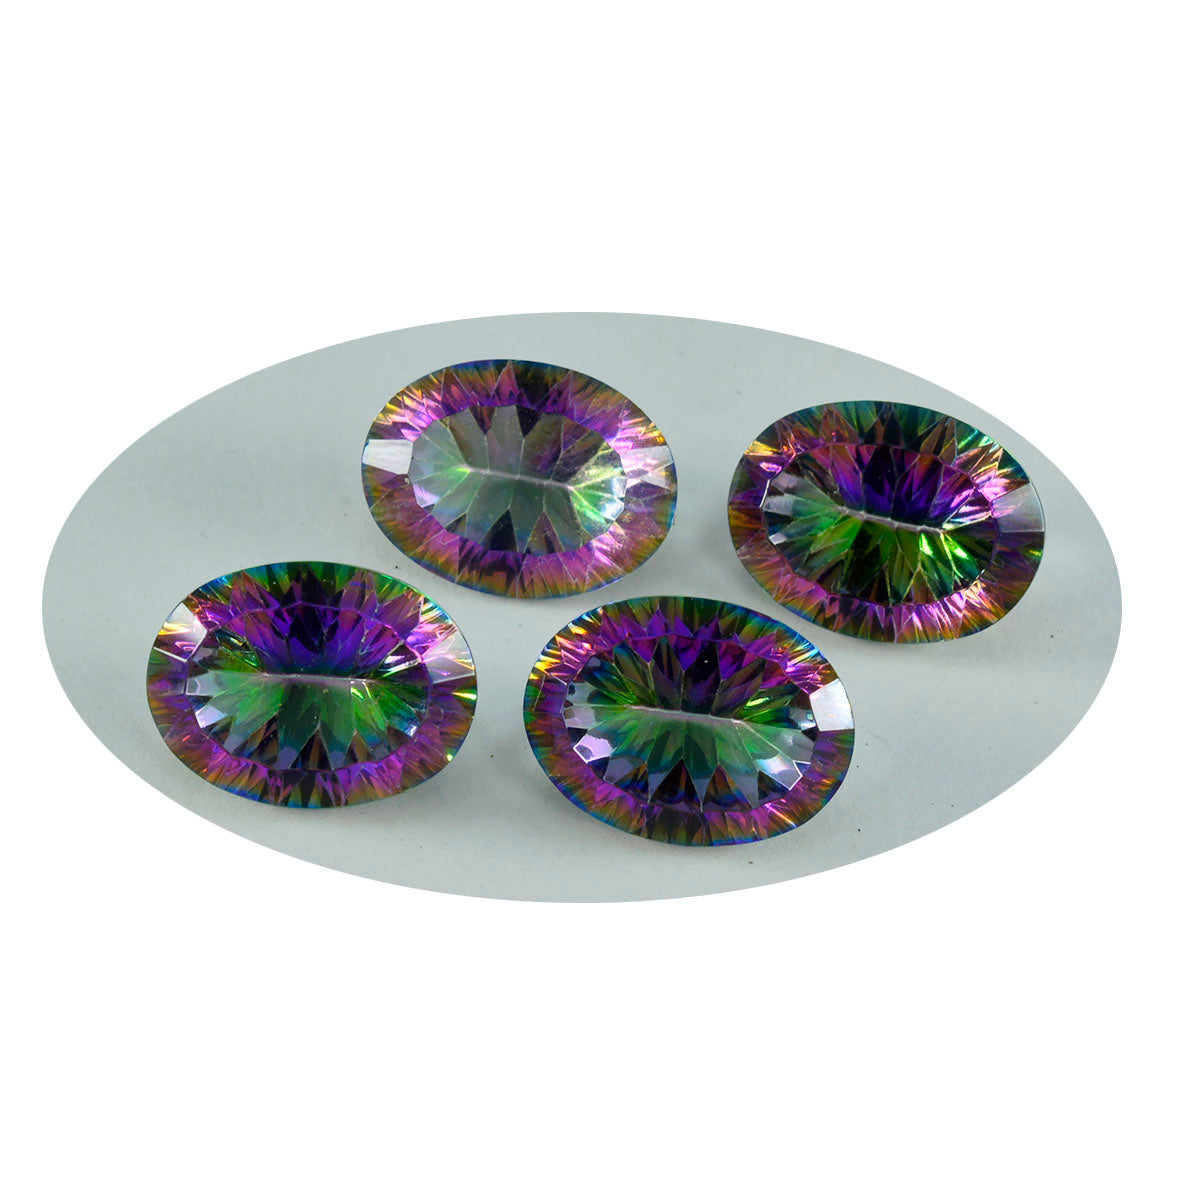 Riyogems 1PC Multi Color Mystic Quartz Faceted 10x12 mm Oval Shape handsome Quality Gemstone